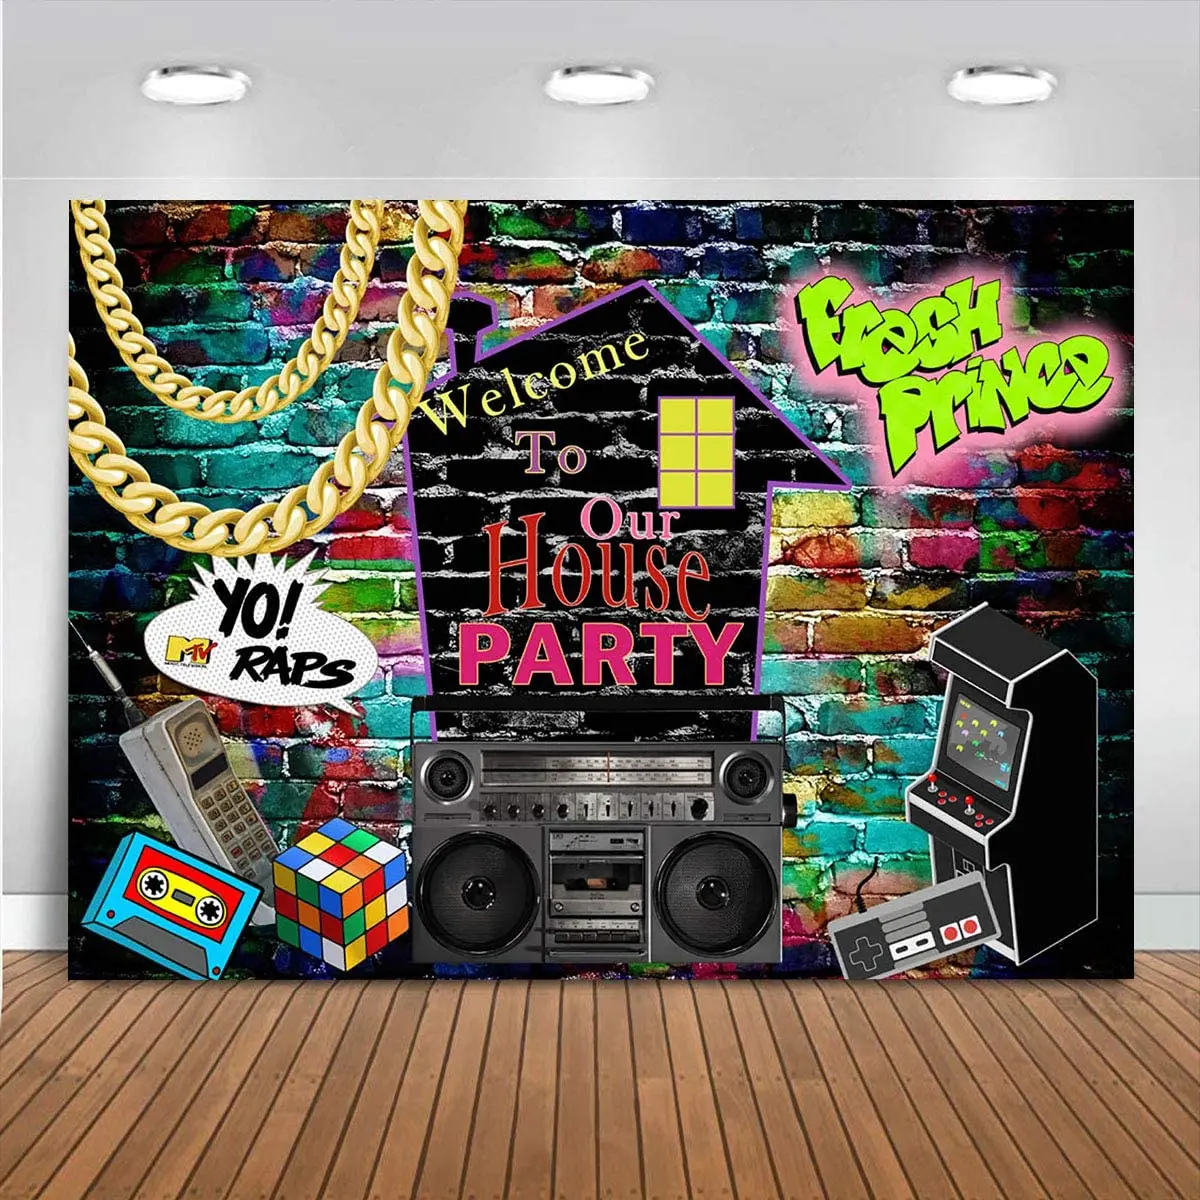 

Фон для фотосъемки в стиле хип-хоп с граффити в стиле 80-х годов красочная кирпичная стена виниловая Ретро музыка рок вечерние к Вечеринка баннер